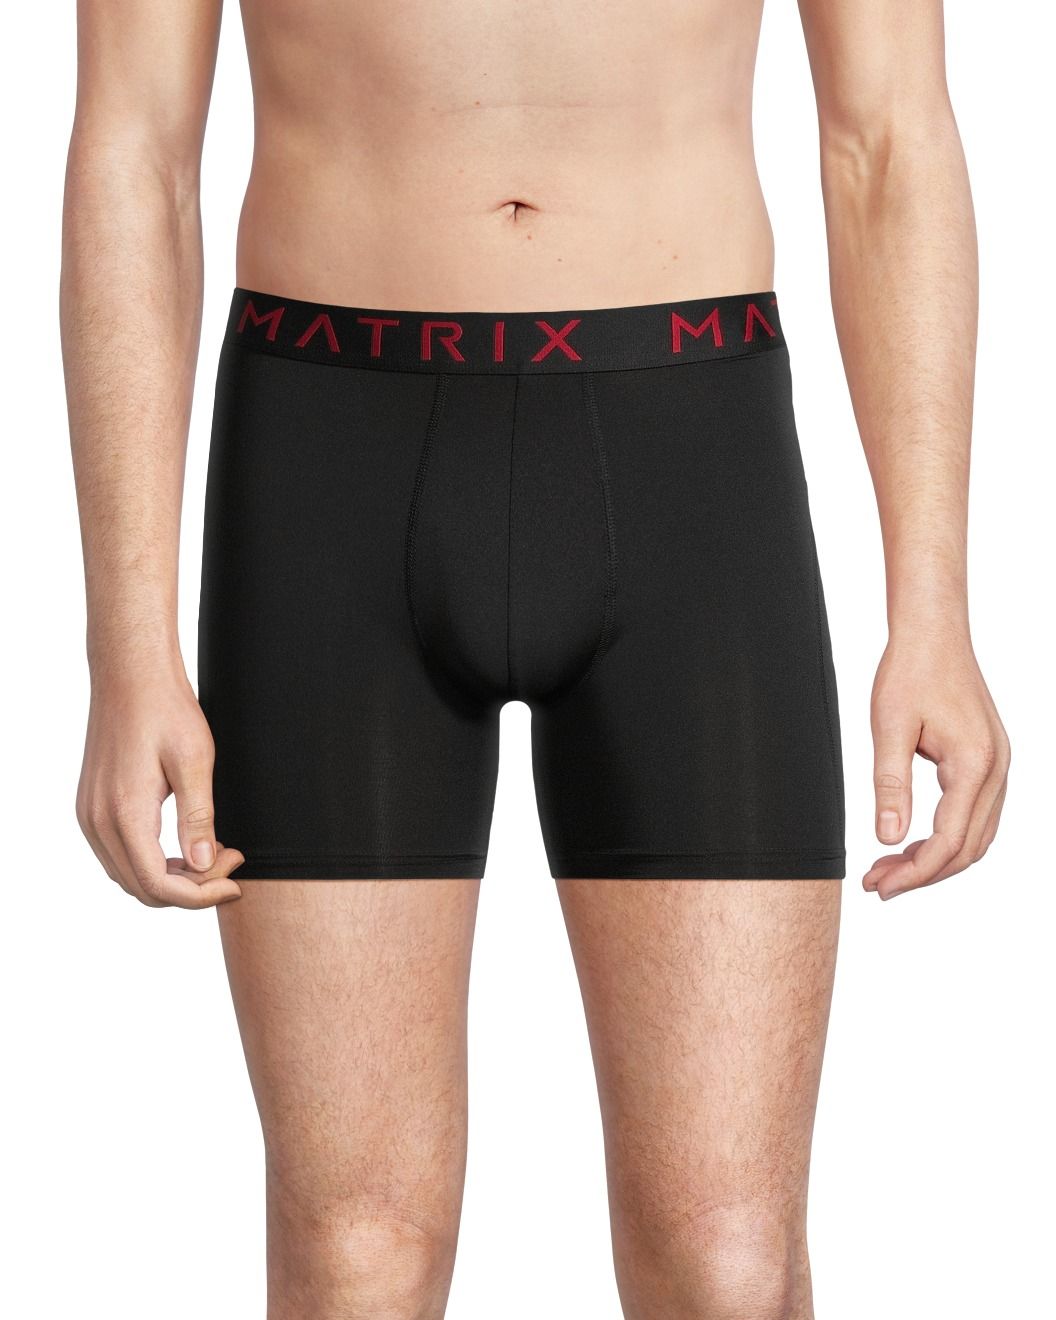 Mens Microfiber Underwear